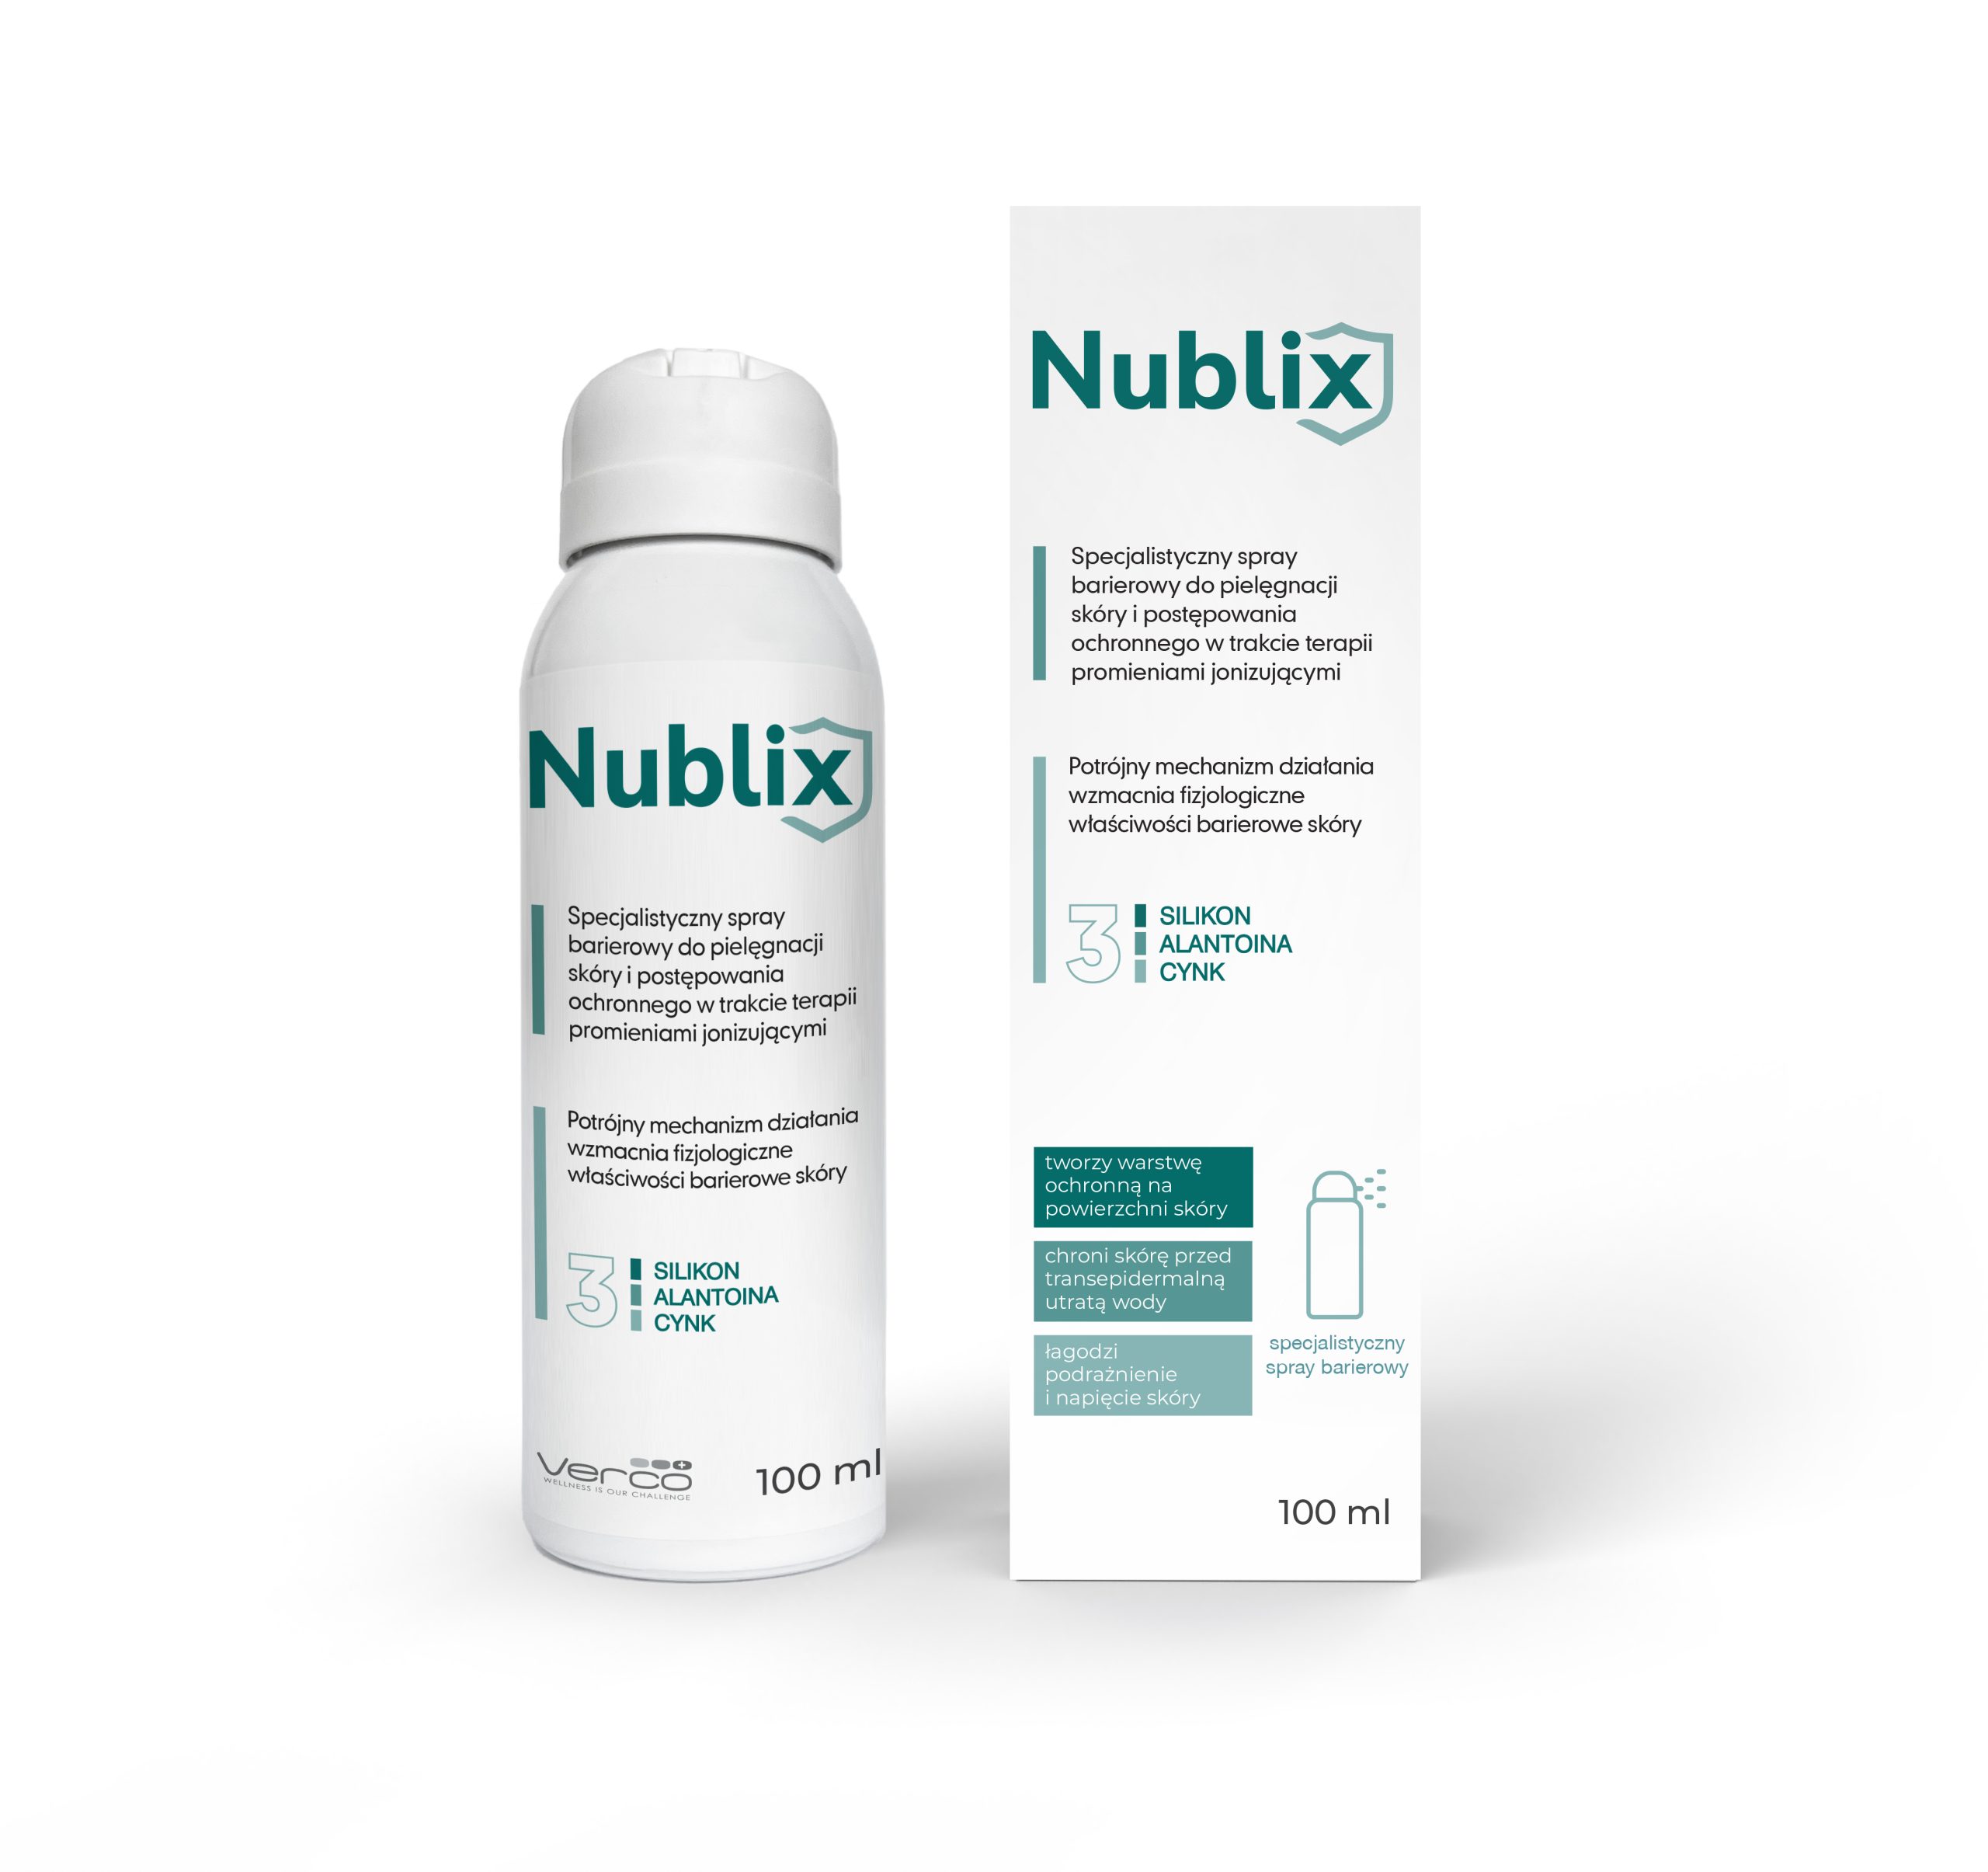 Nublix spray